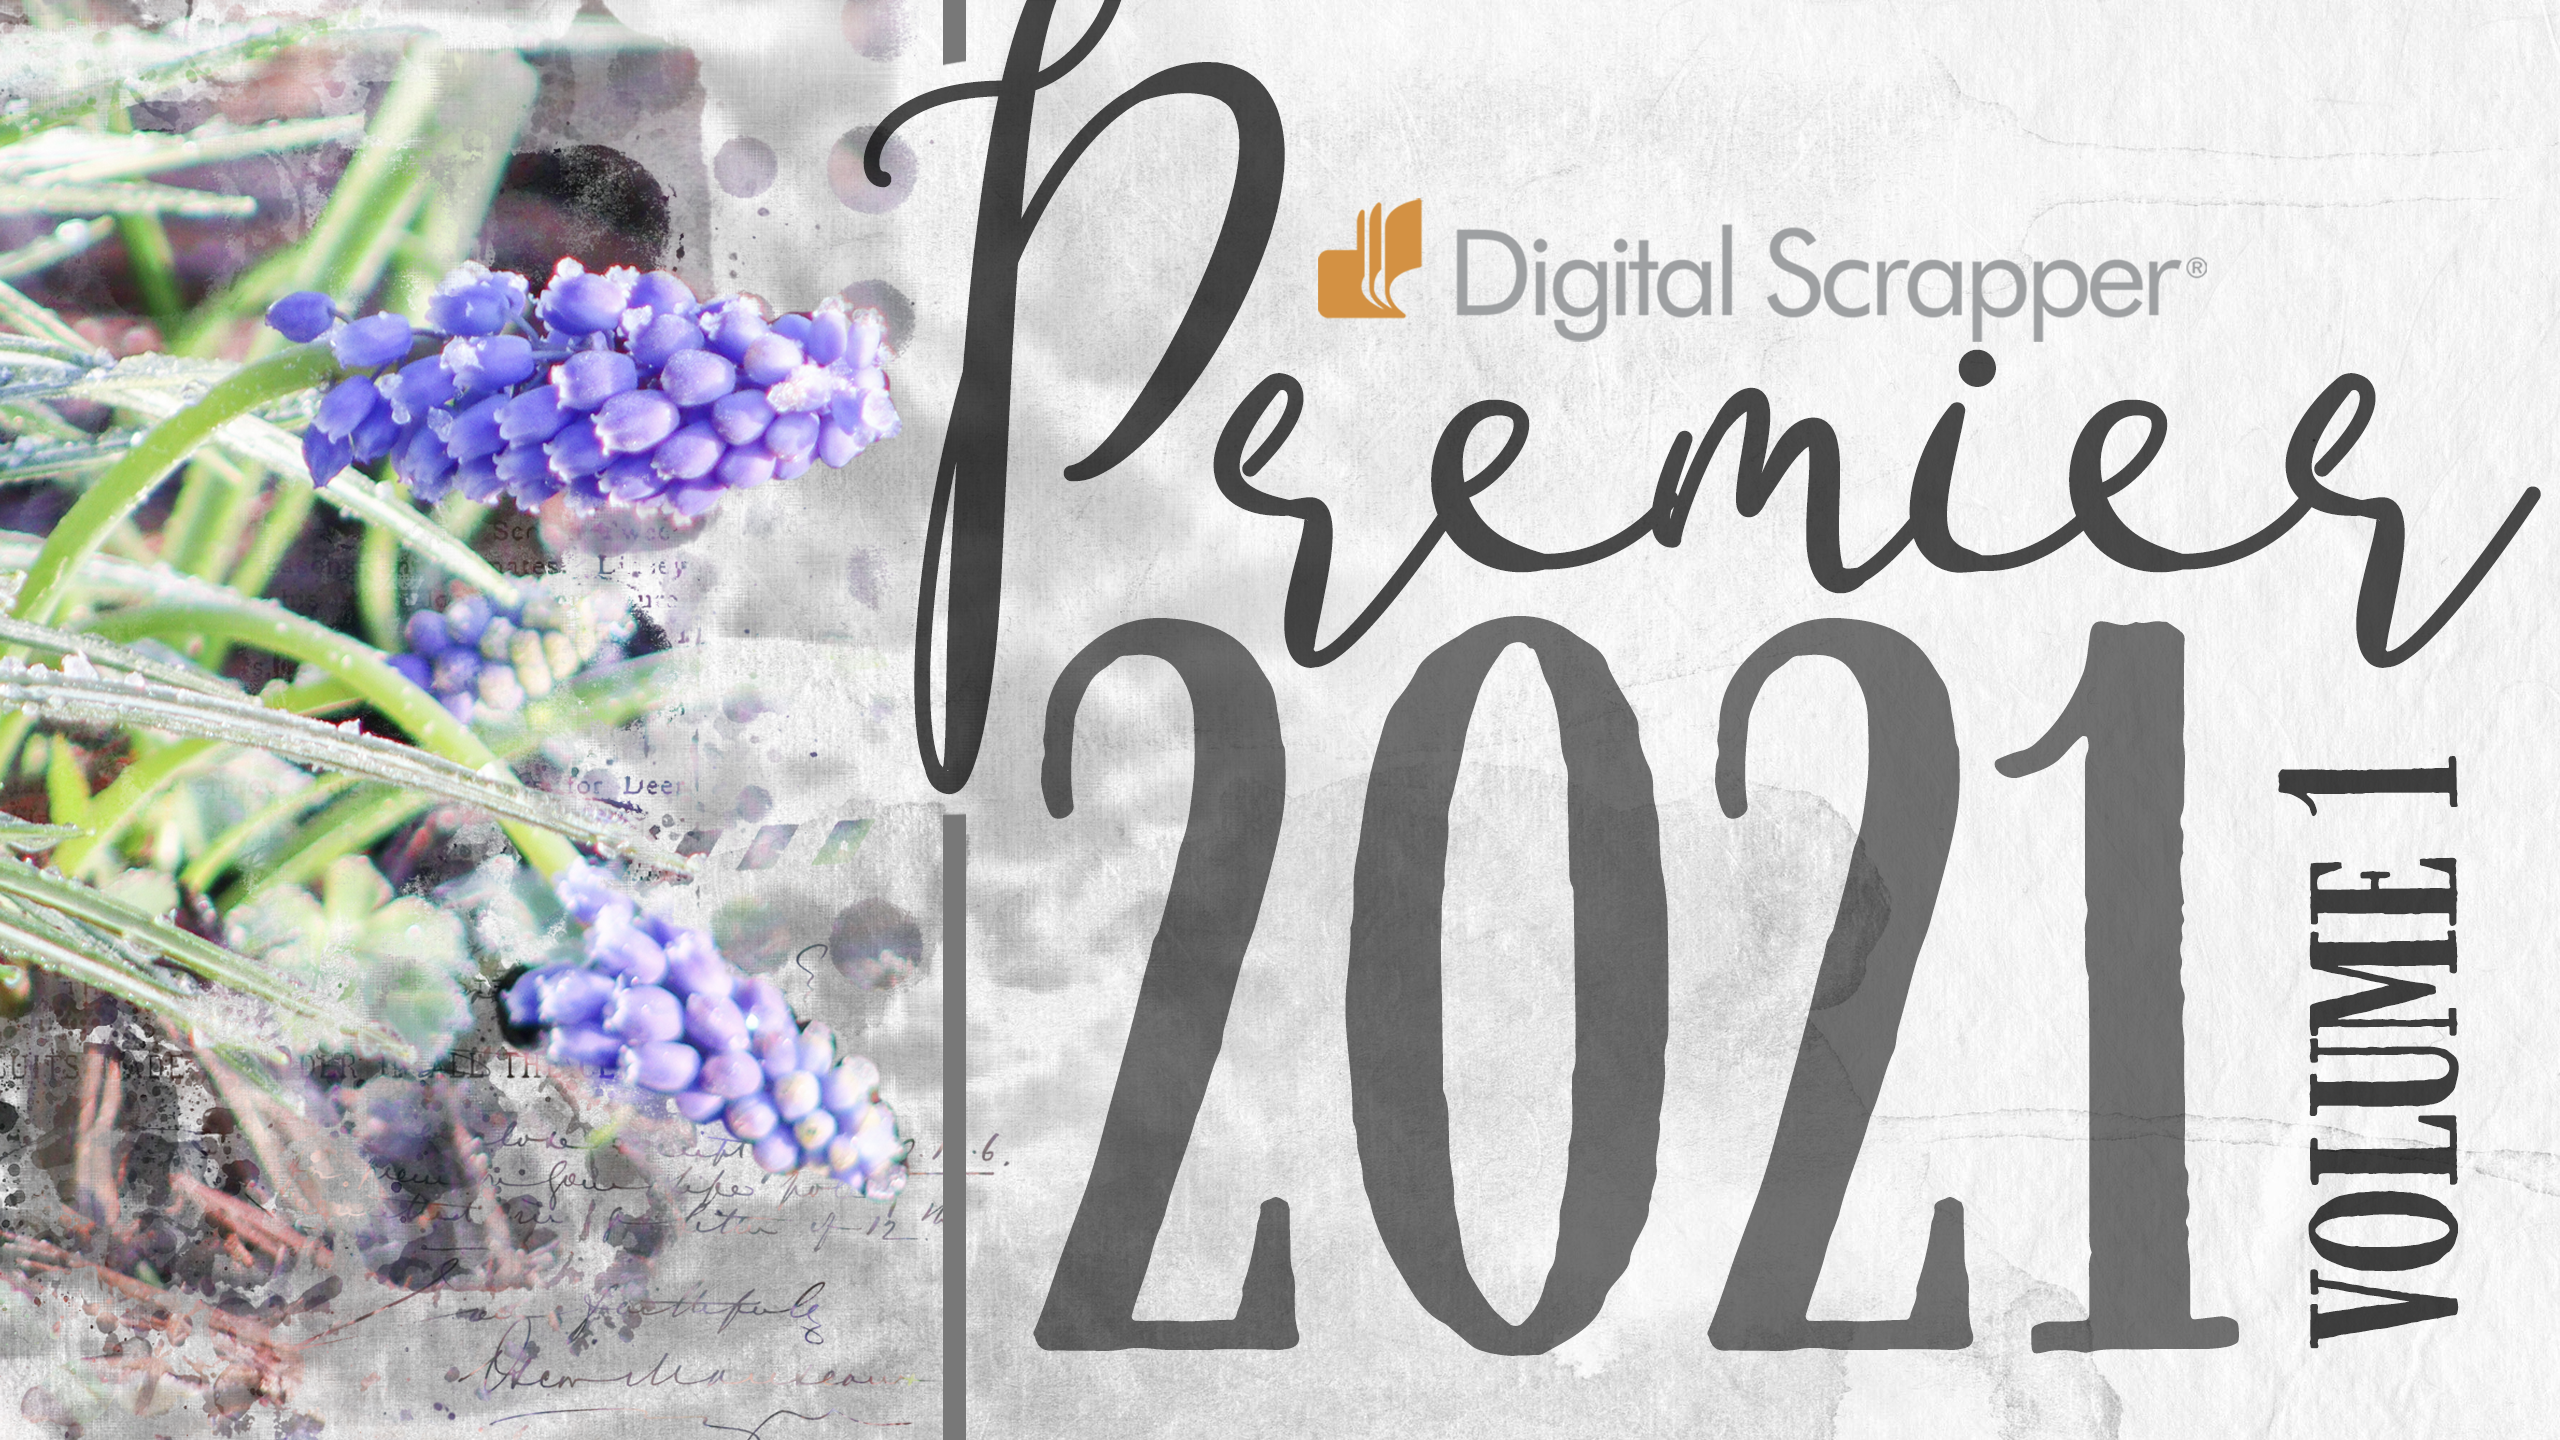 Digital Scrapper Premier 2021, Volume 1